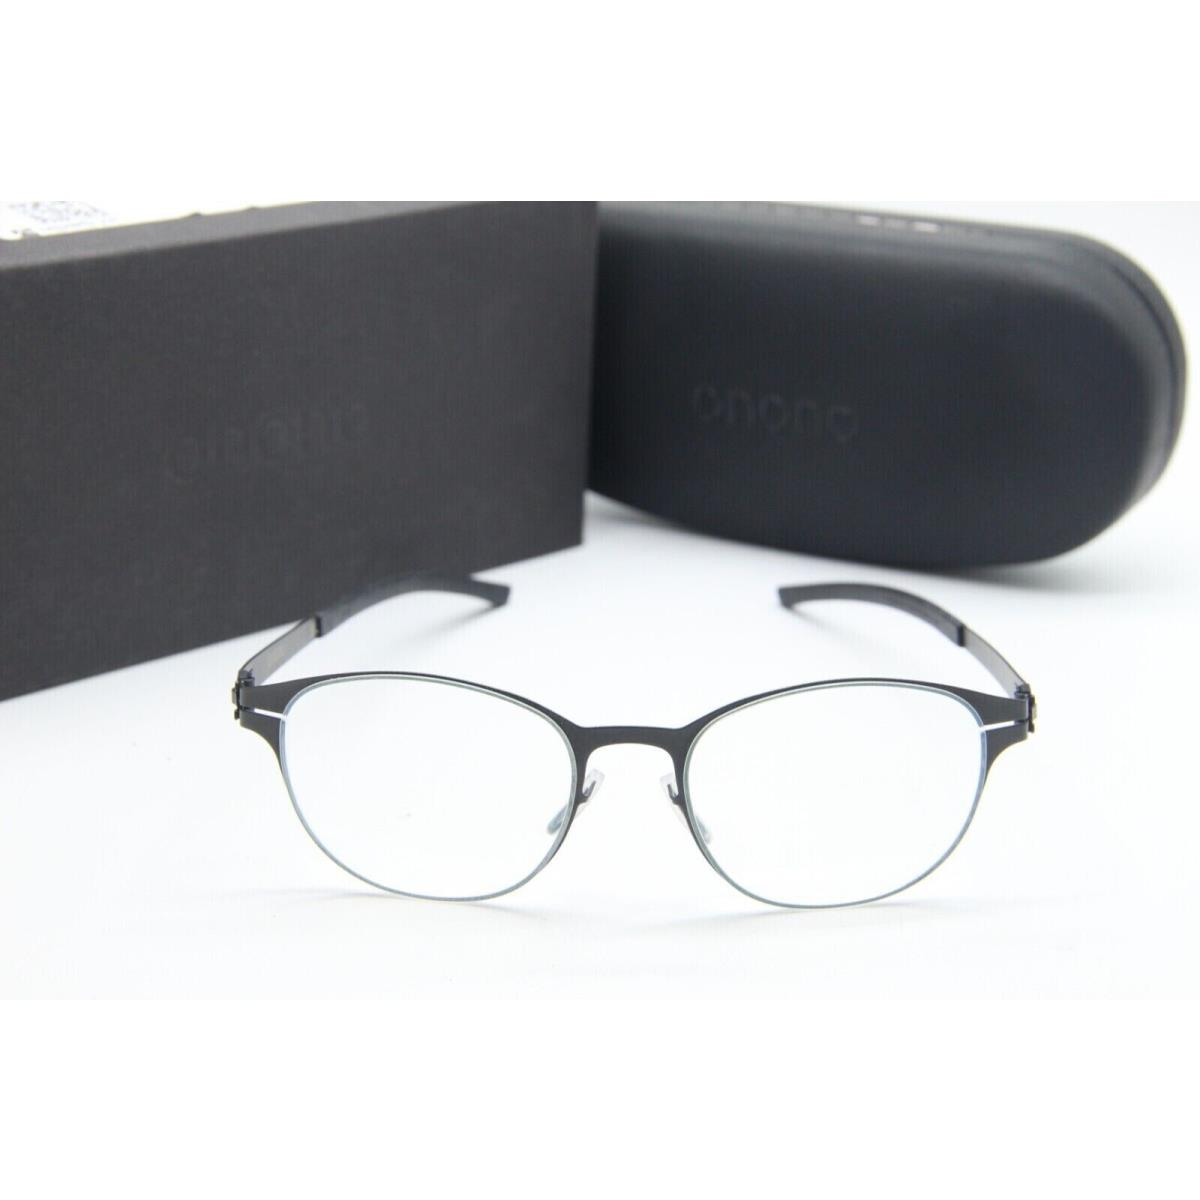 ic! berlin eyeglasses ONONO - Black Frame, Clear Lens